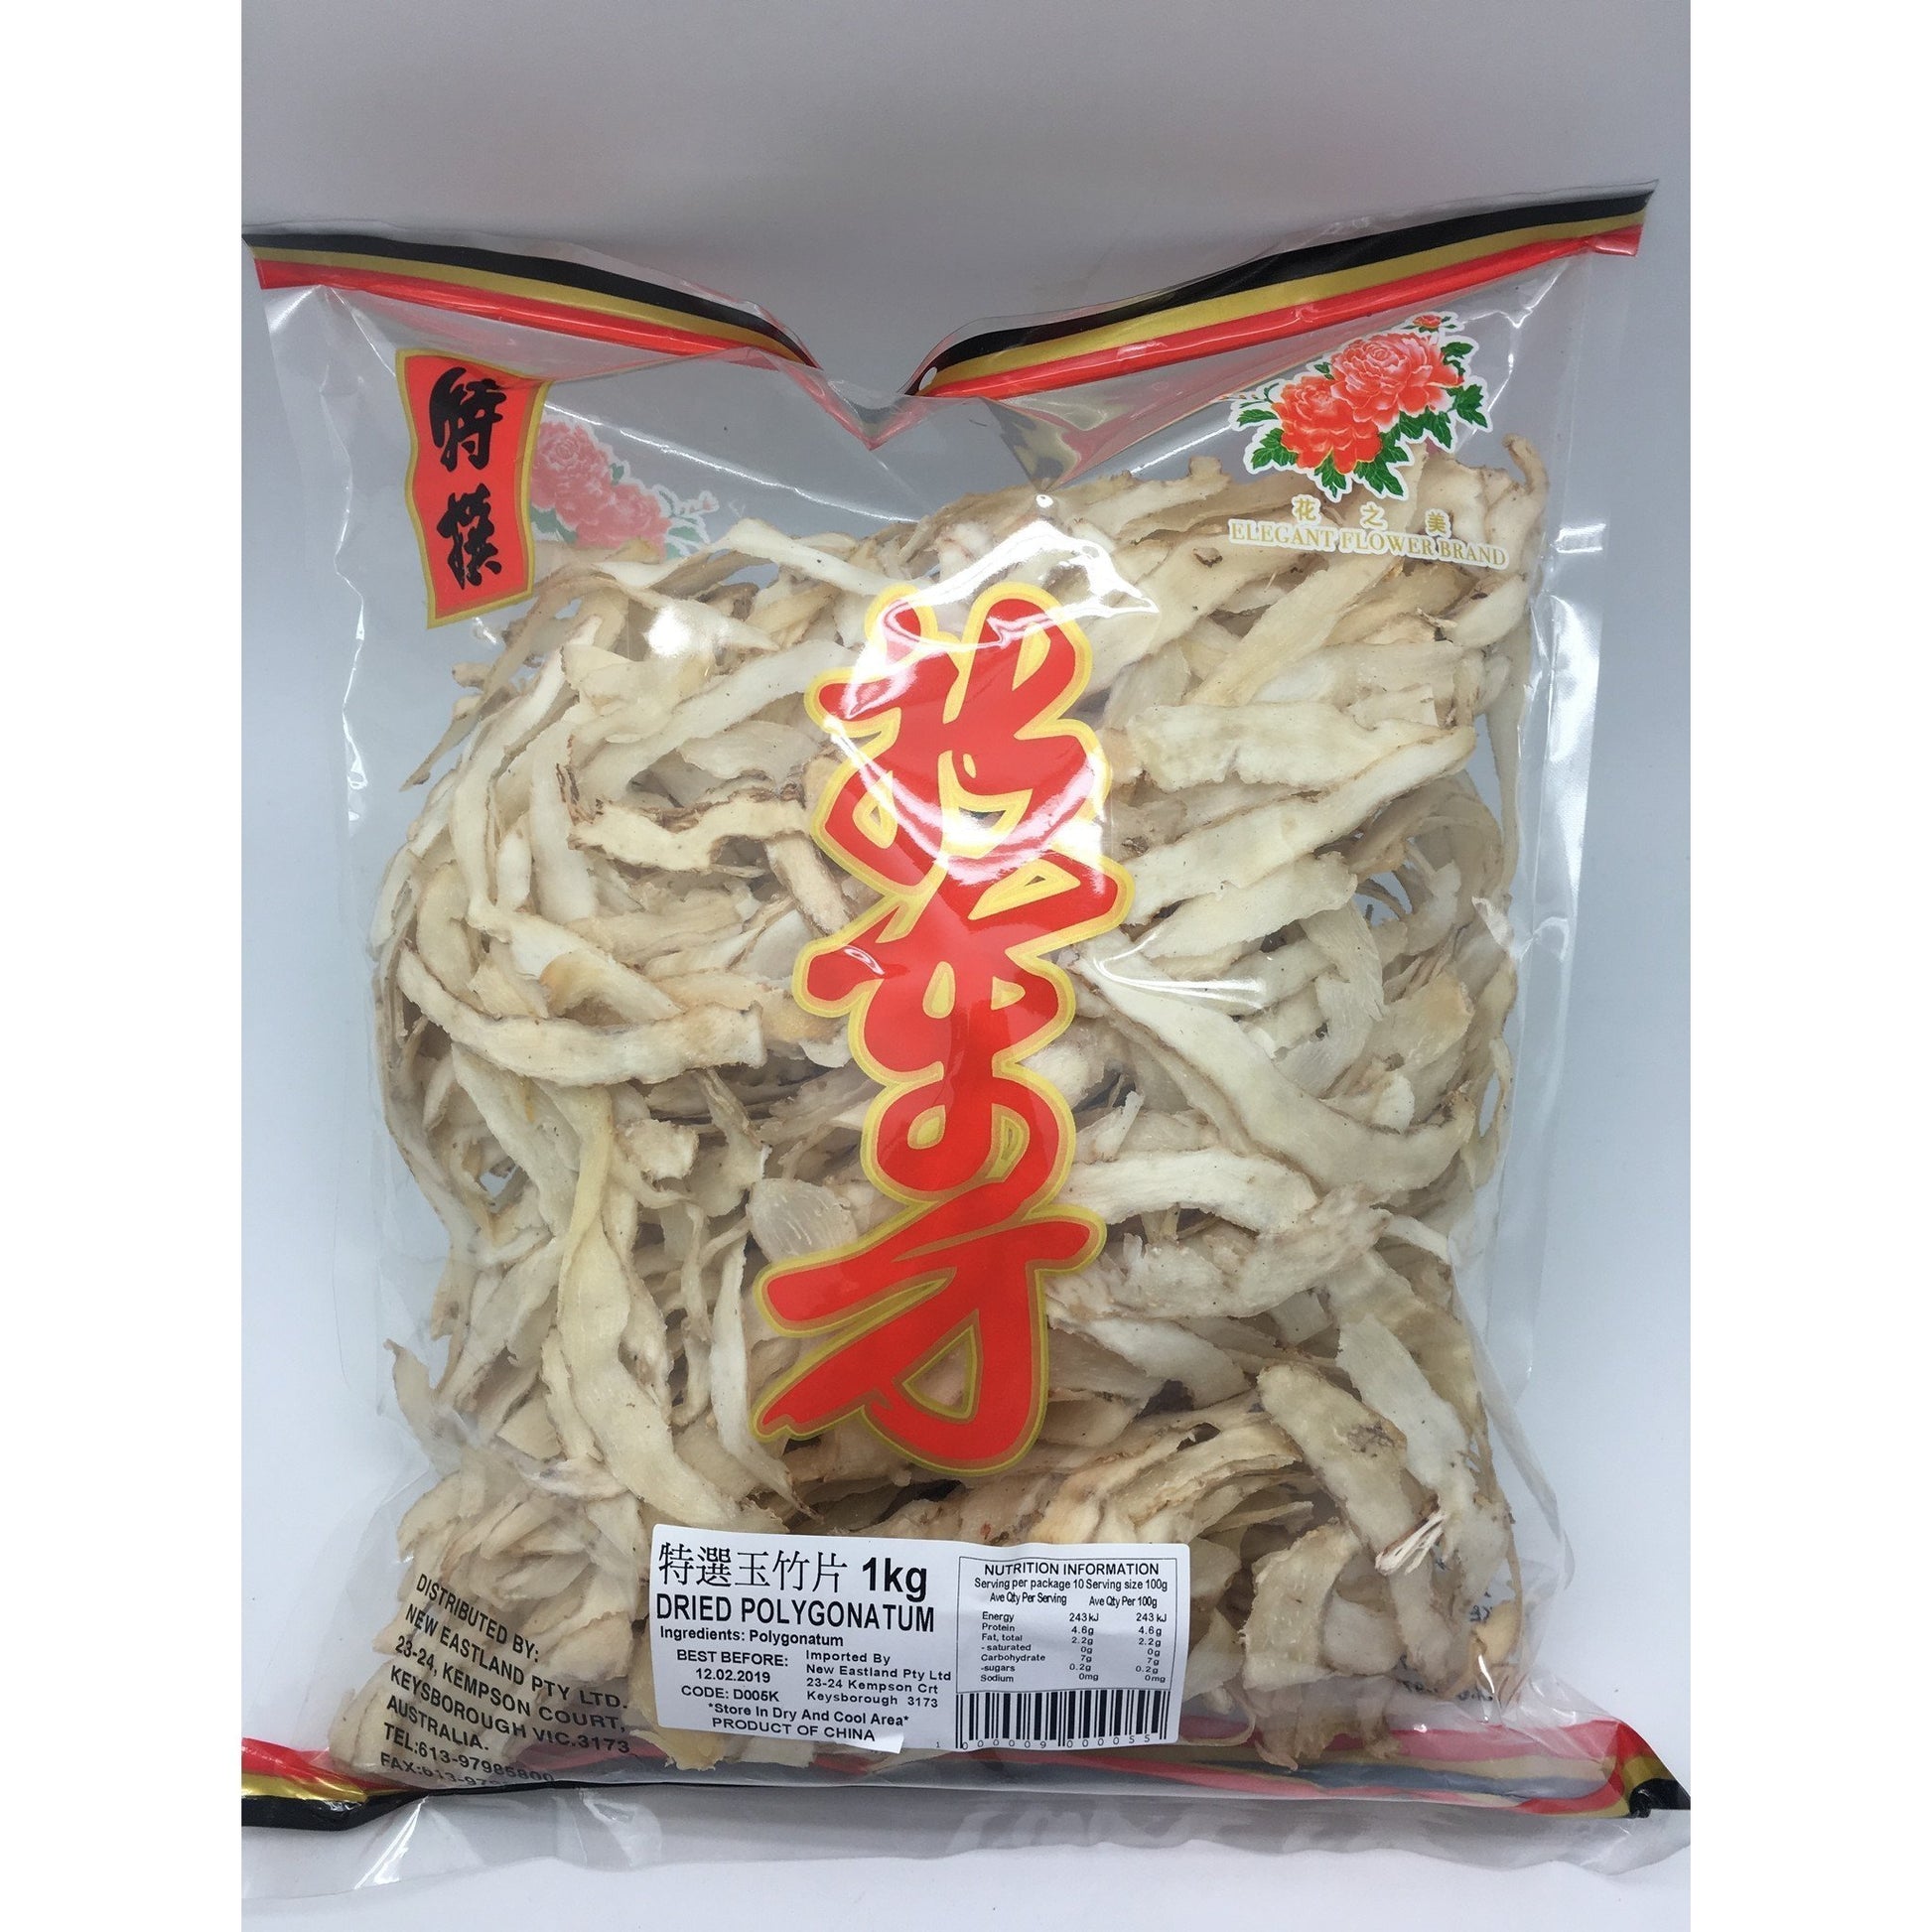 D005K New Eastland Pty Ltd - Dried Polygonatum 1kg -  25 bags / 1CTN - New Eastland Pty Ltd - Asian food wholesalers